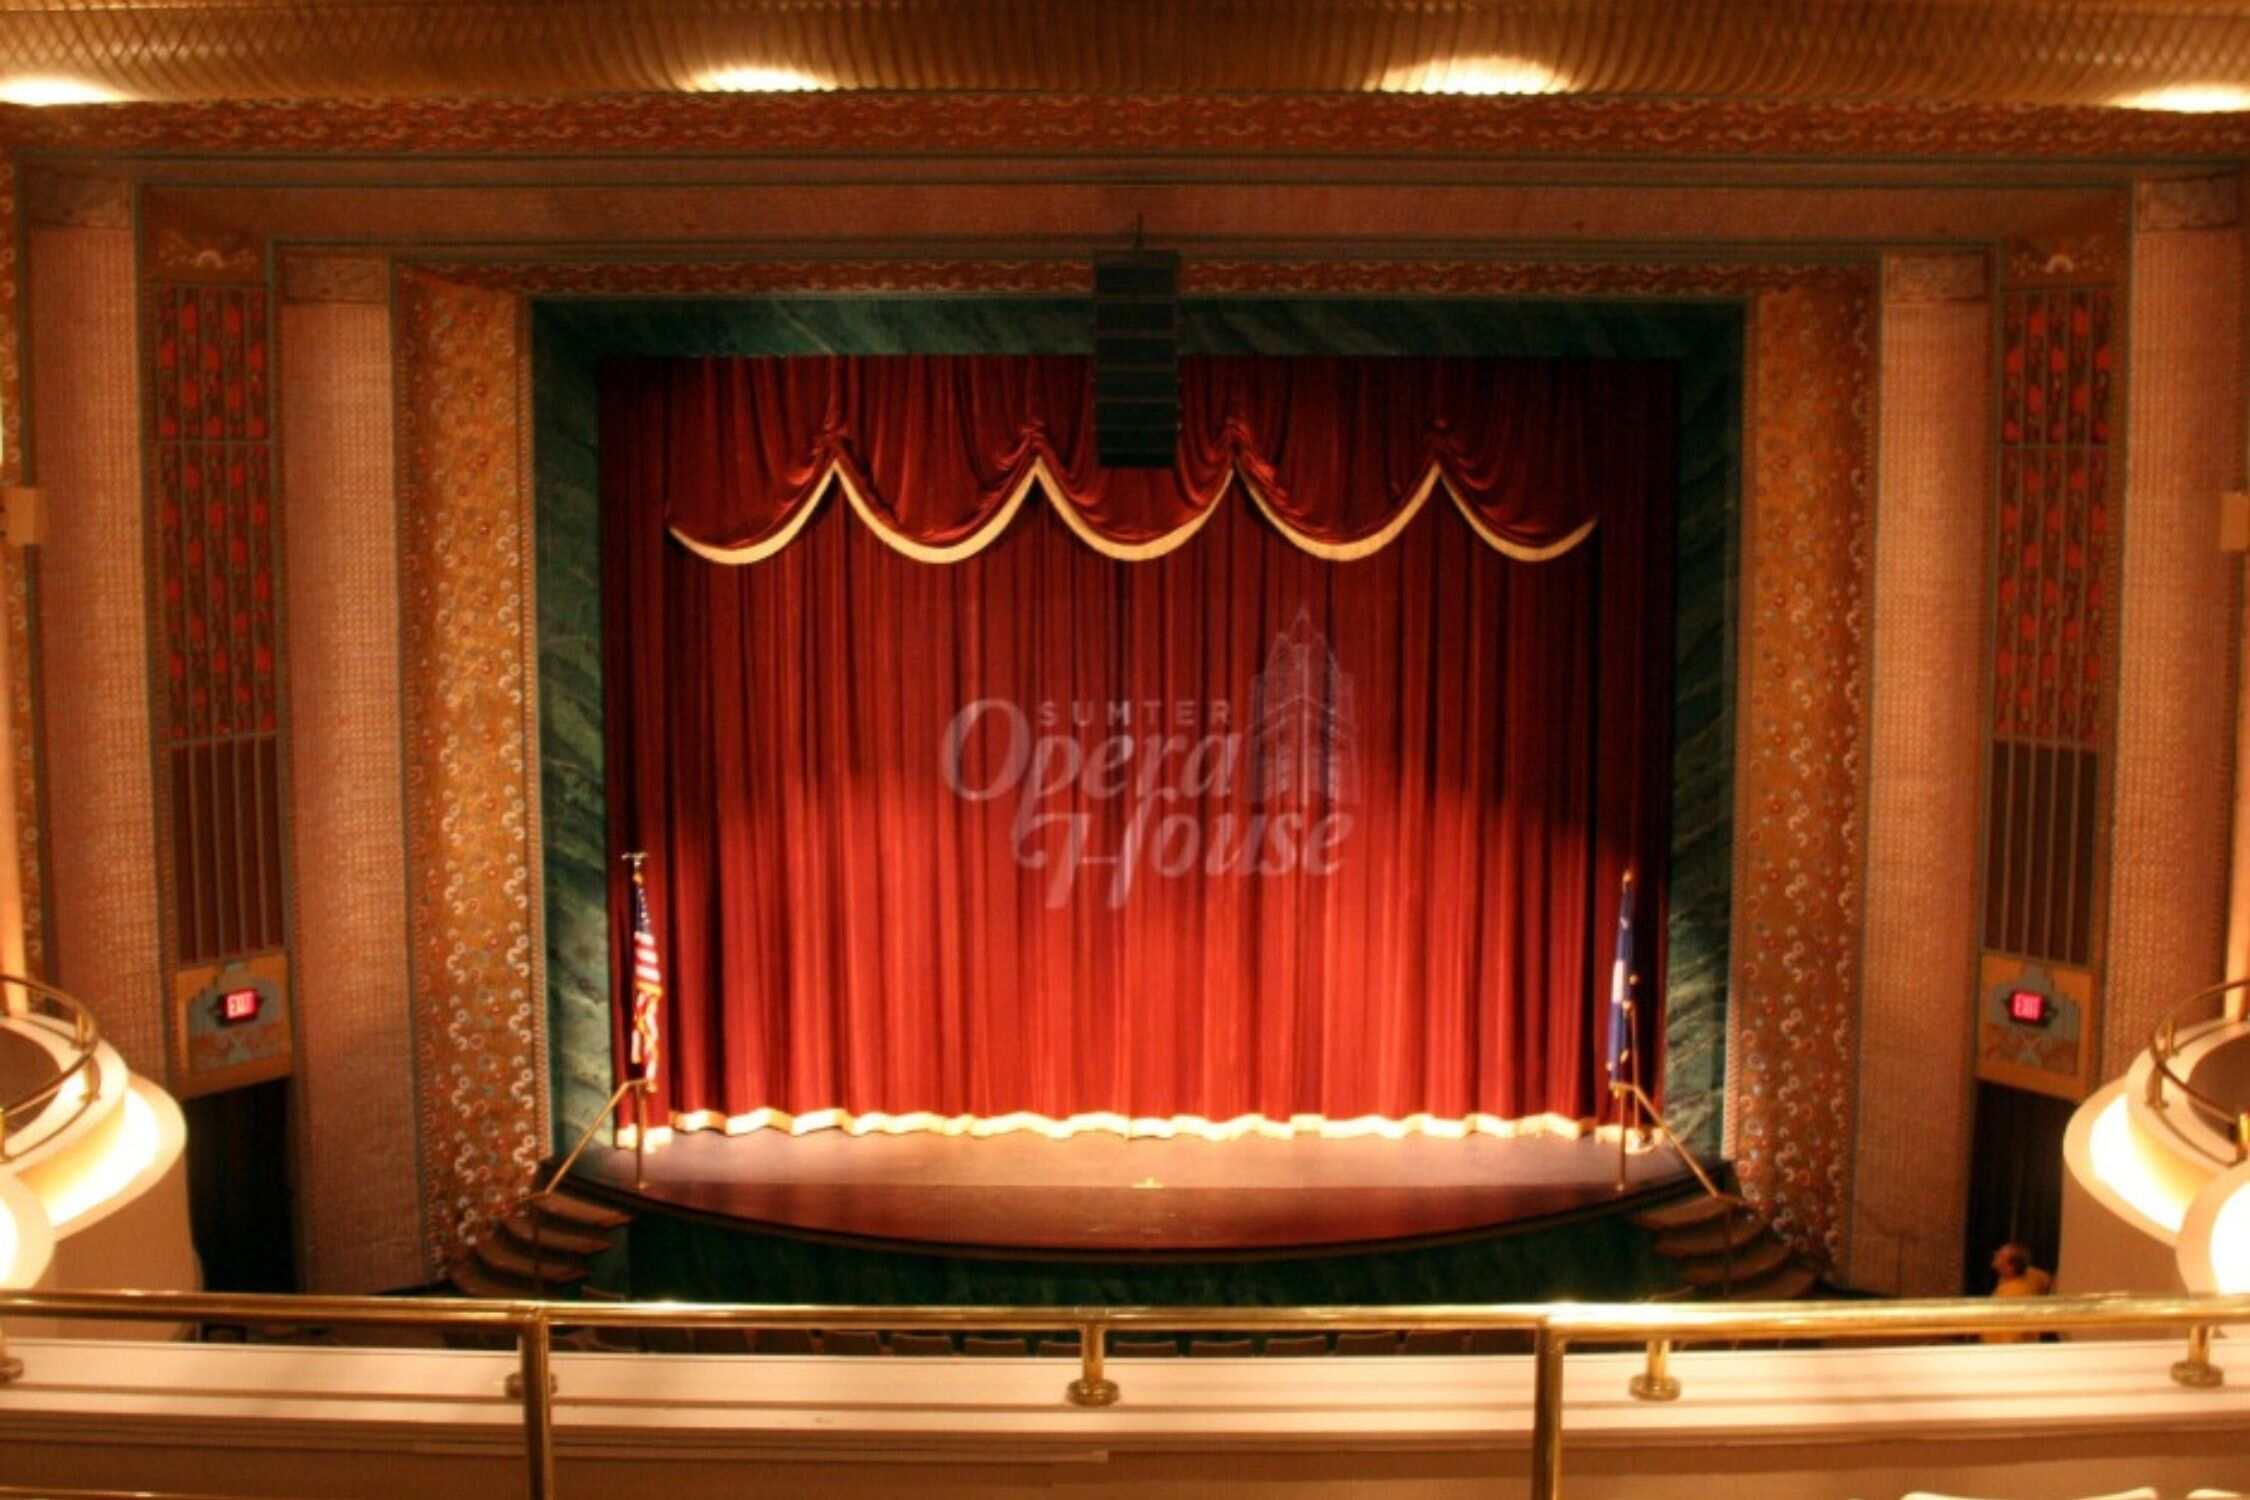 Sumter Opera House